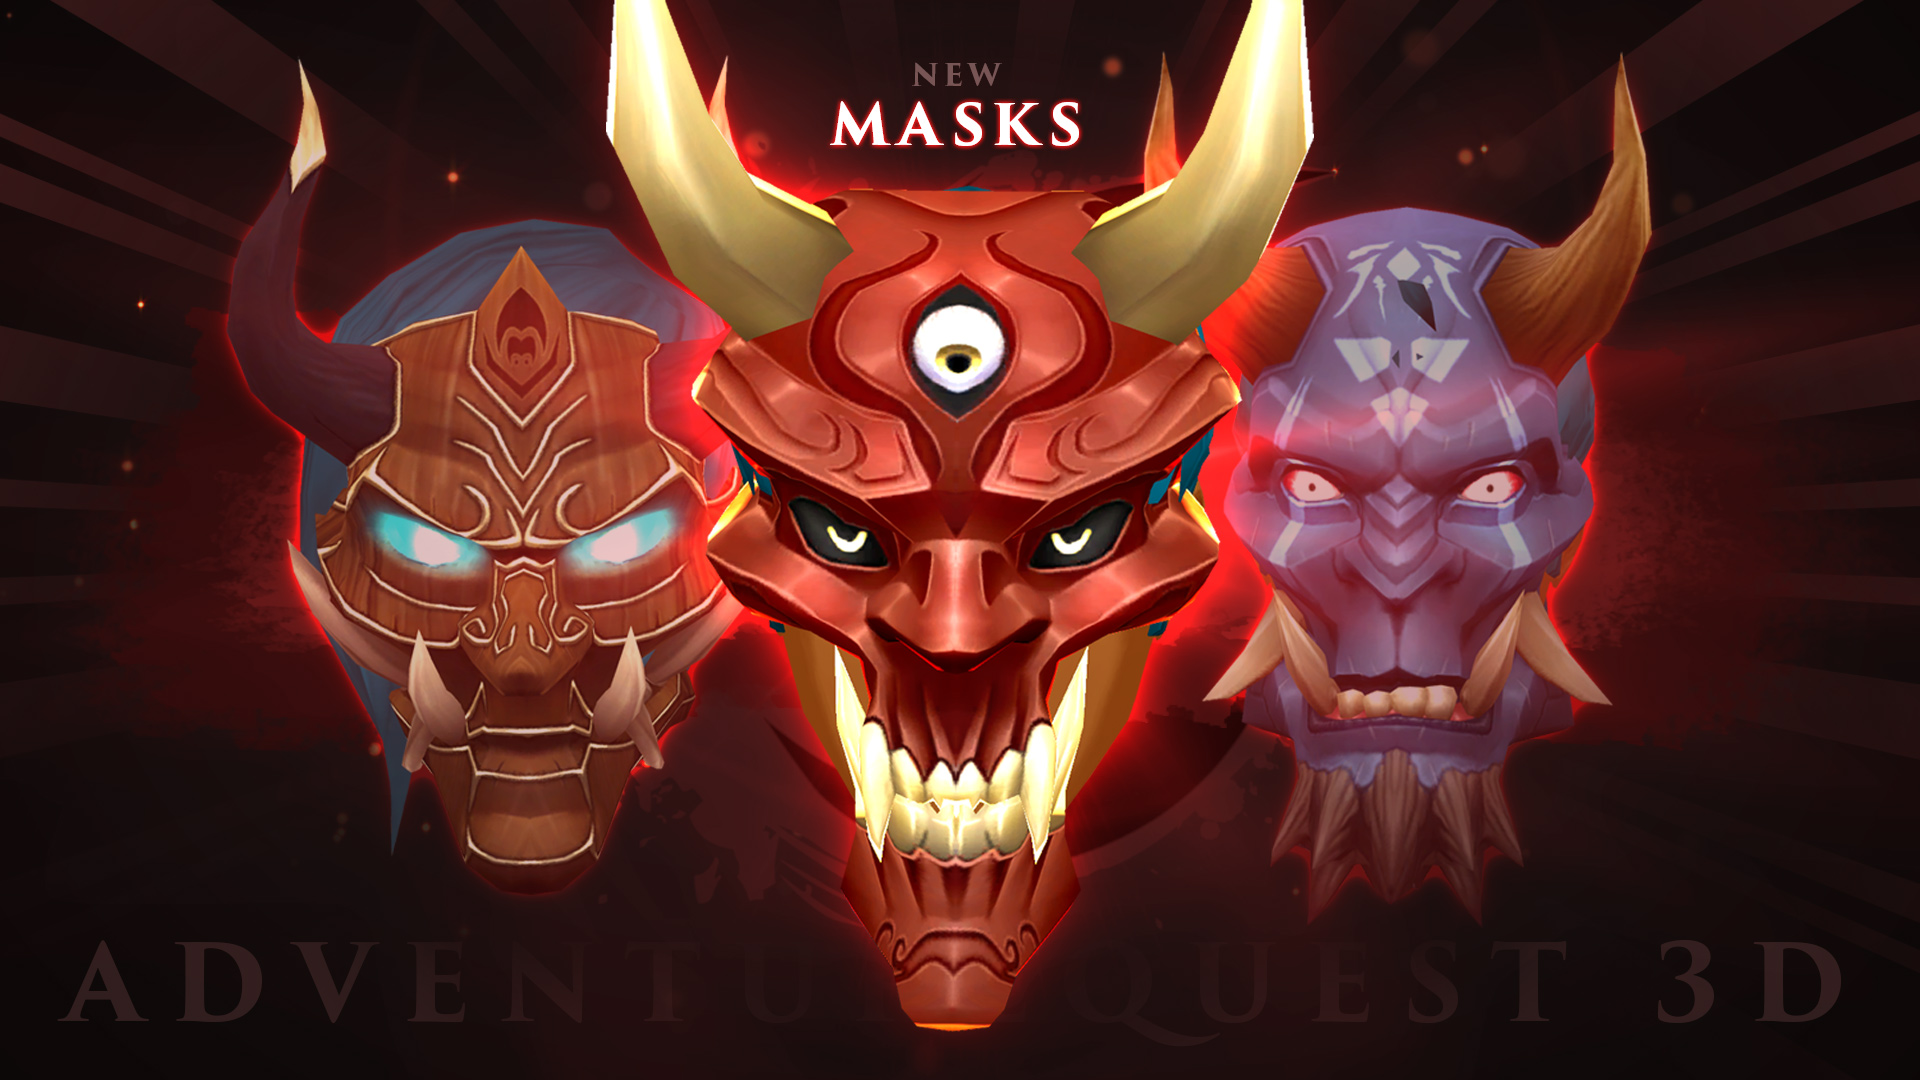 New Live Event Masks